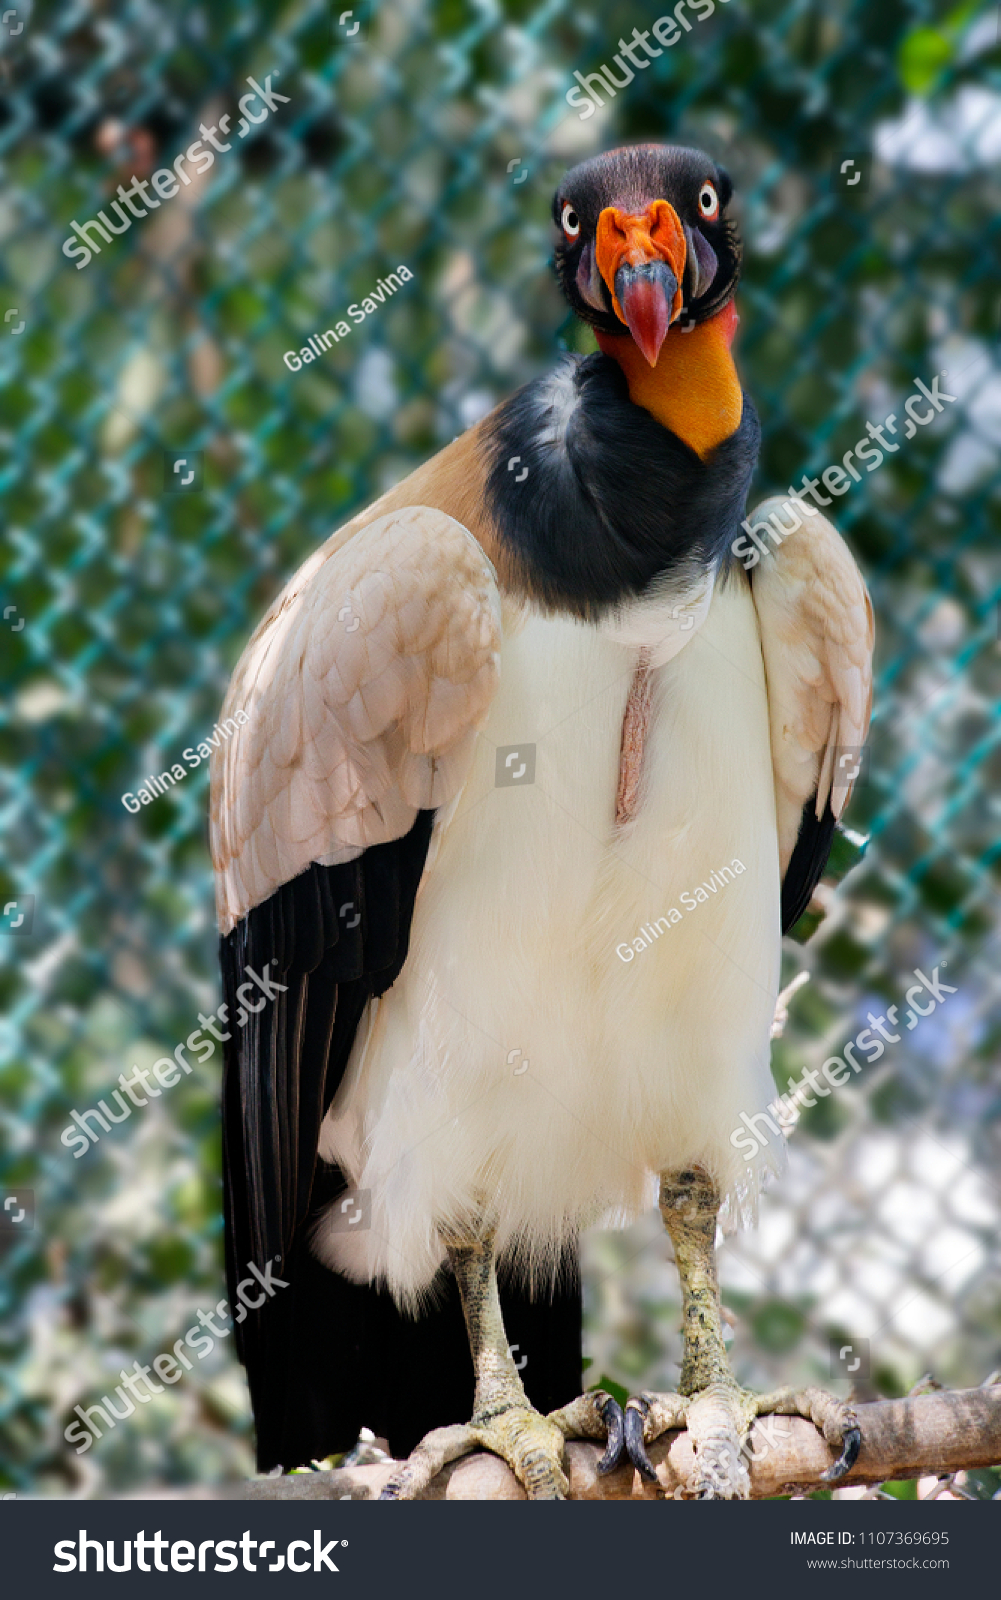 Royalty Vulture Royalty Vulture Bird Large Stock Photo Edit Now 1107369695,Porcini Mushrooms Near Me